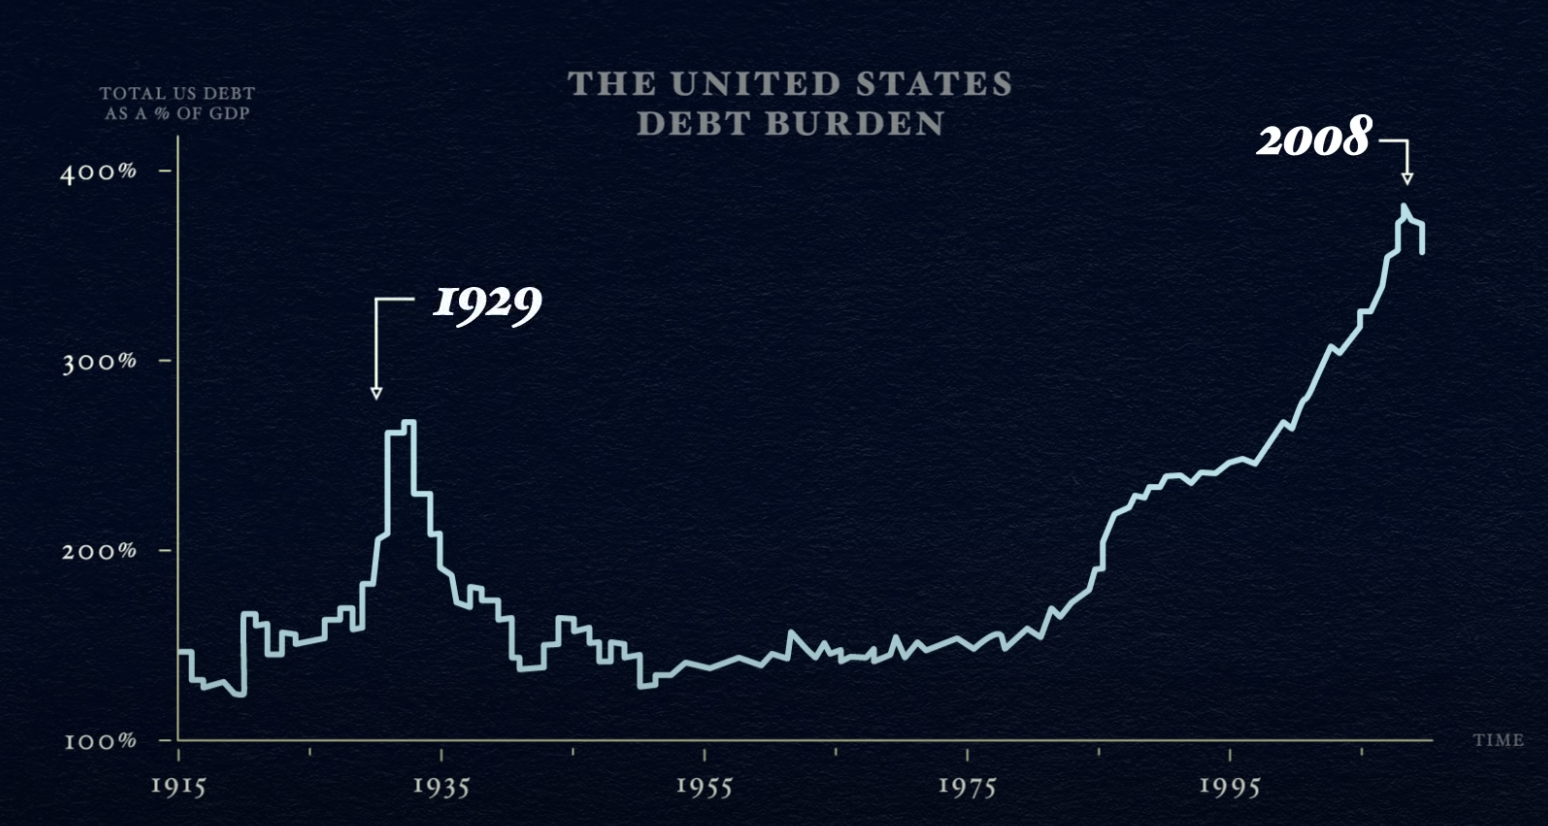 US Debt Burden for the past 100 years